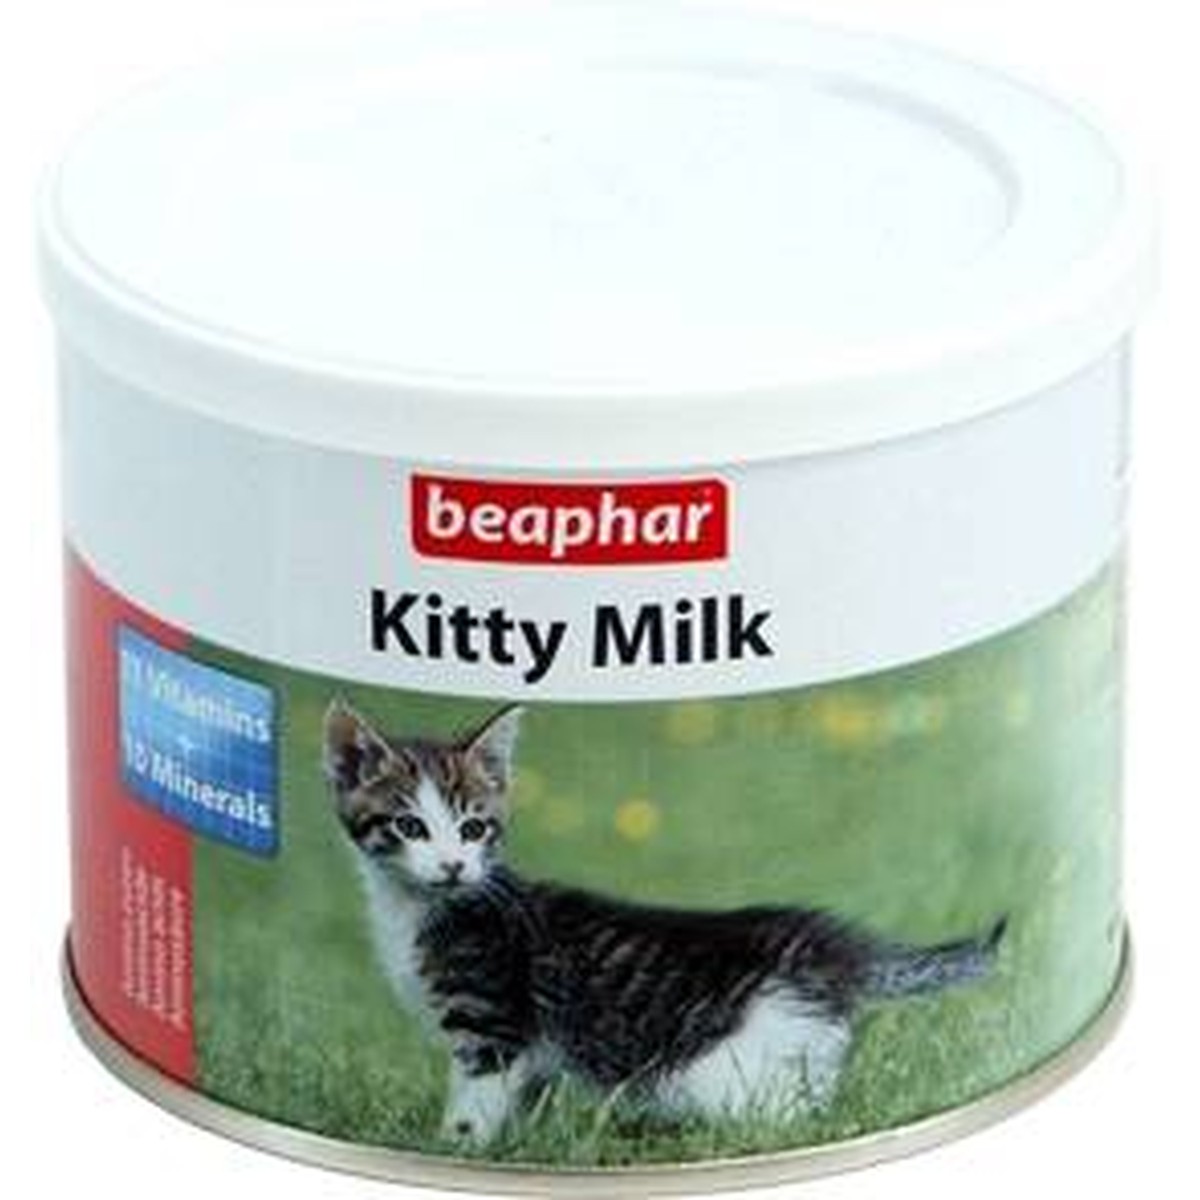   Kitty-Milk.  chatons orphelins. 200 g  200g